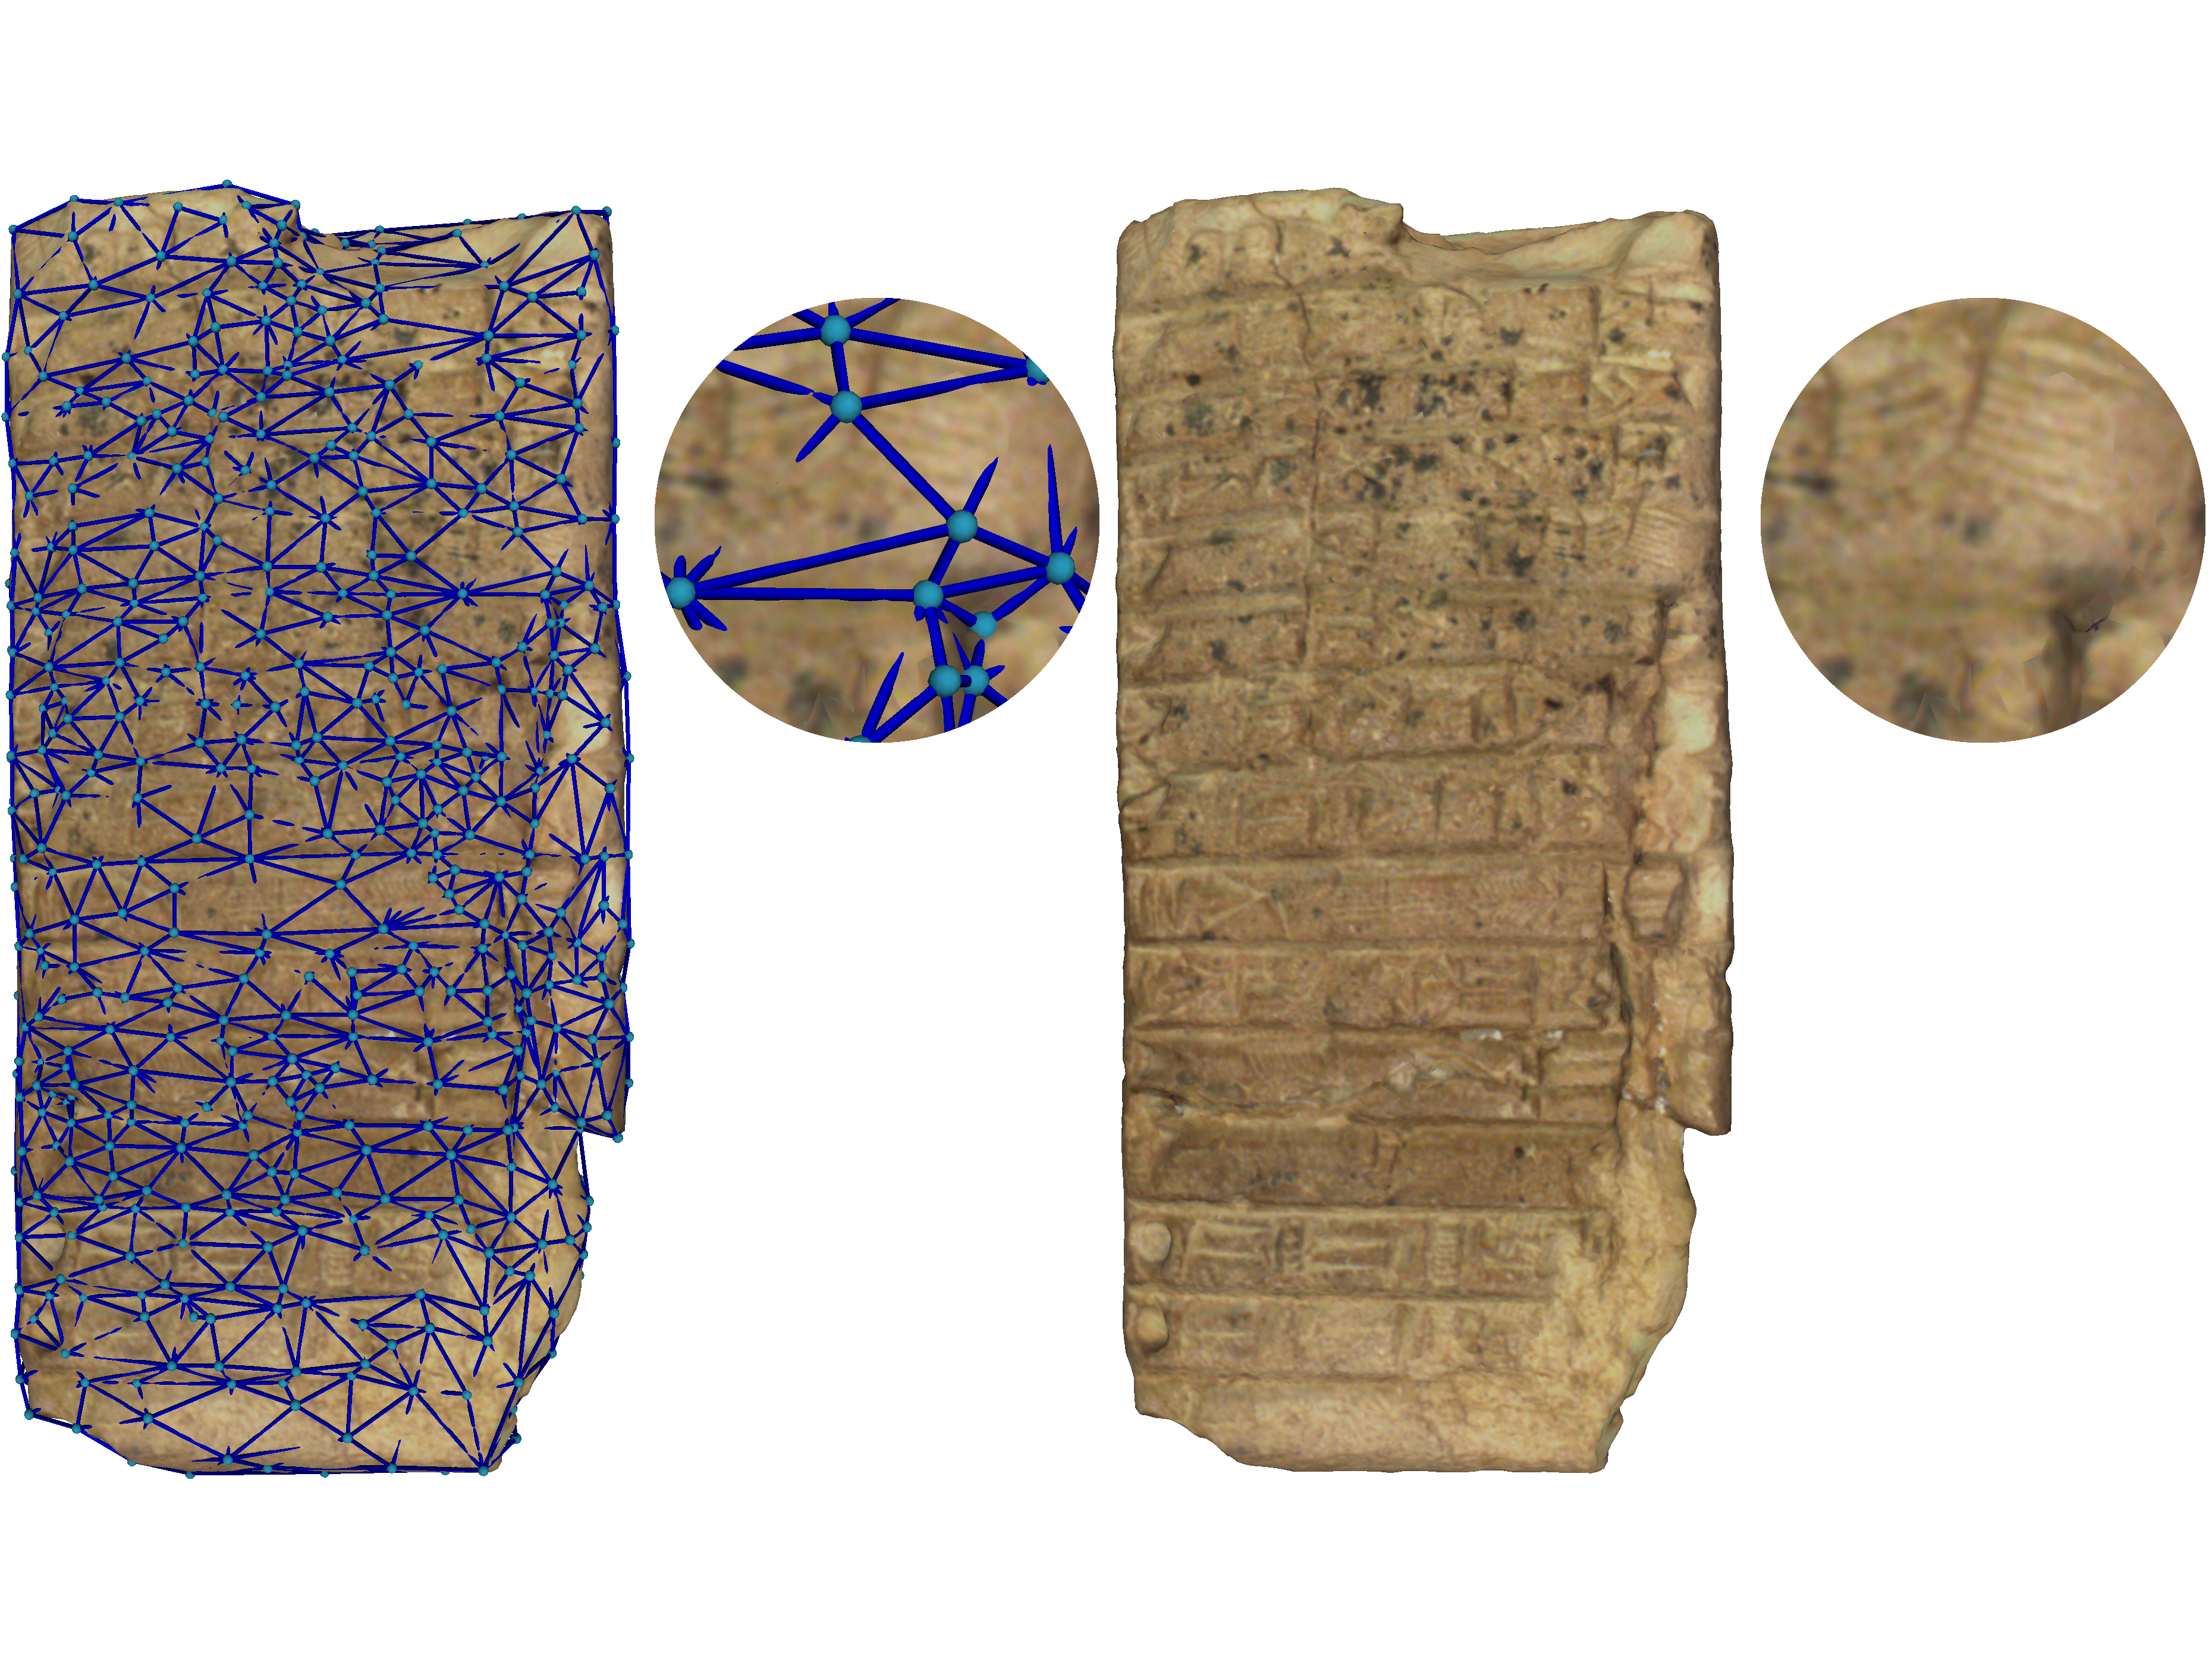 Cuneiform tablet AR app